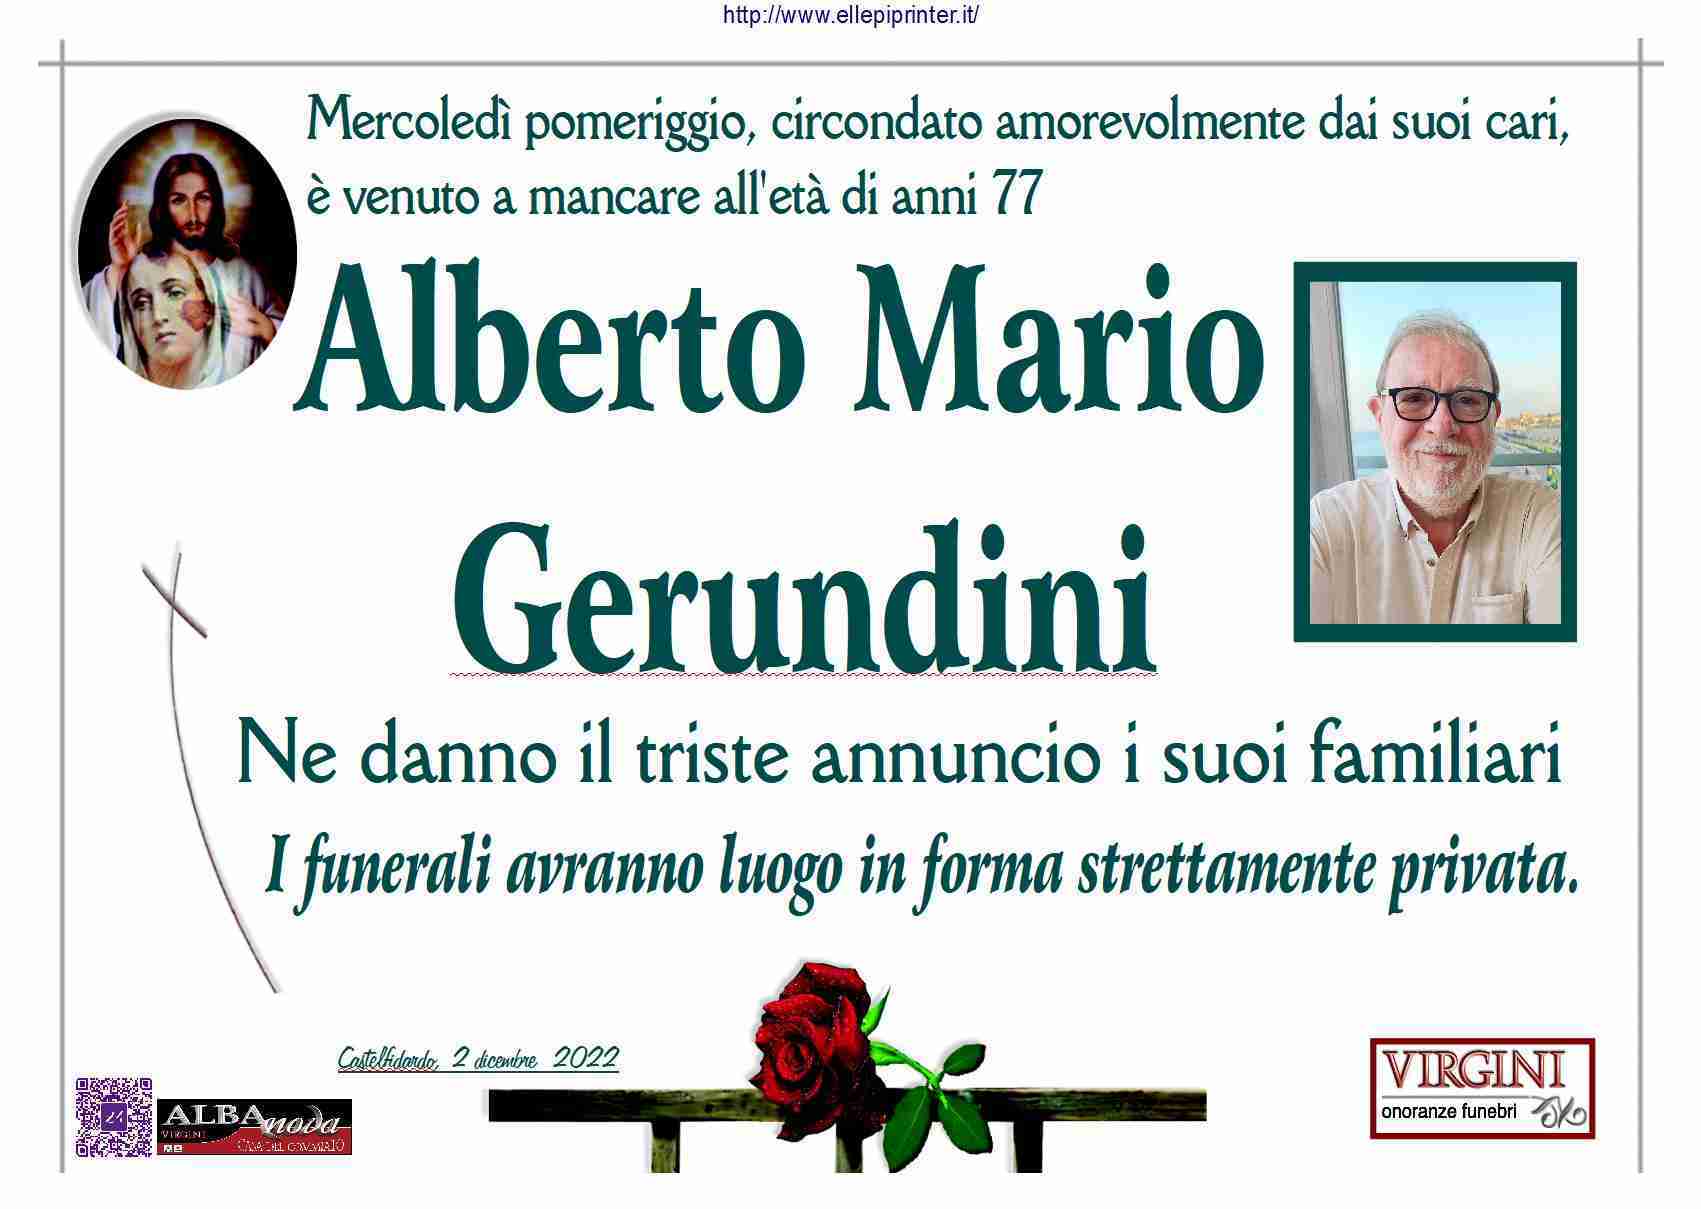 Alberto Mario Gerundini